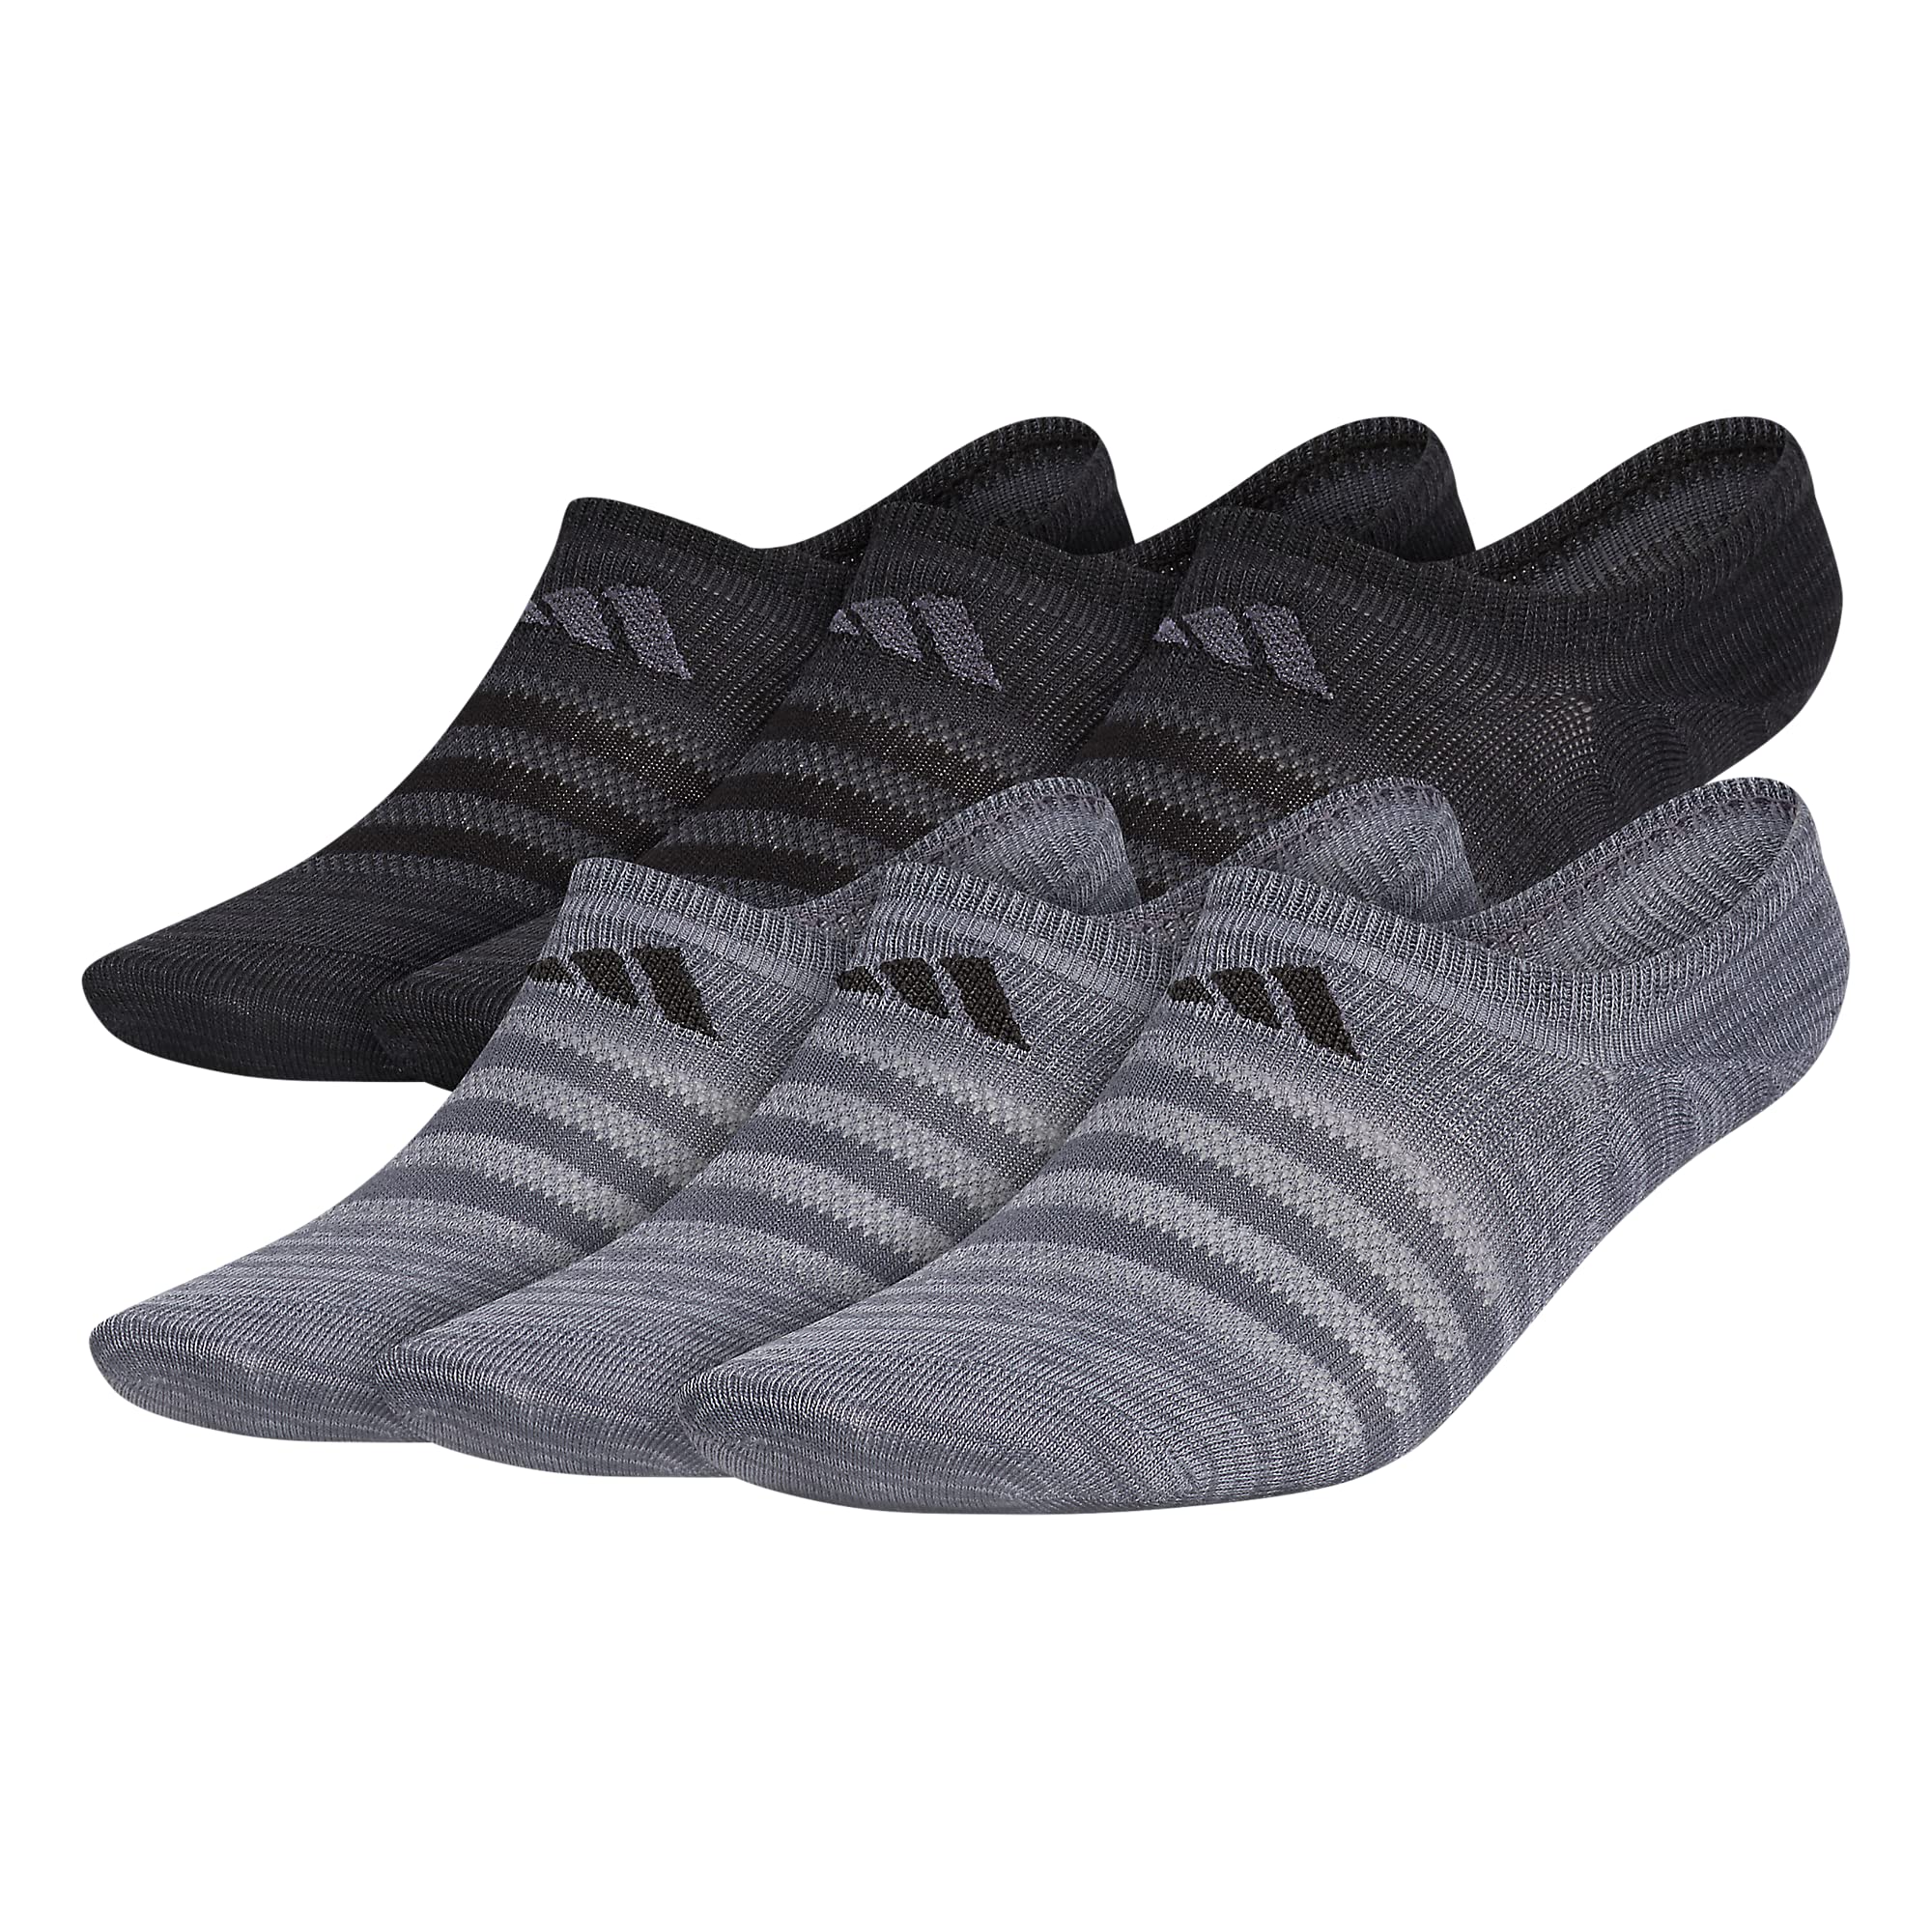 adidas Men's Superlite Super No Show Socks (6-Pair), Onix Grey/Grey/Black, Large